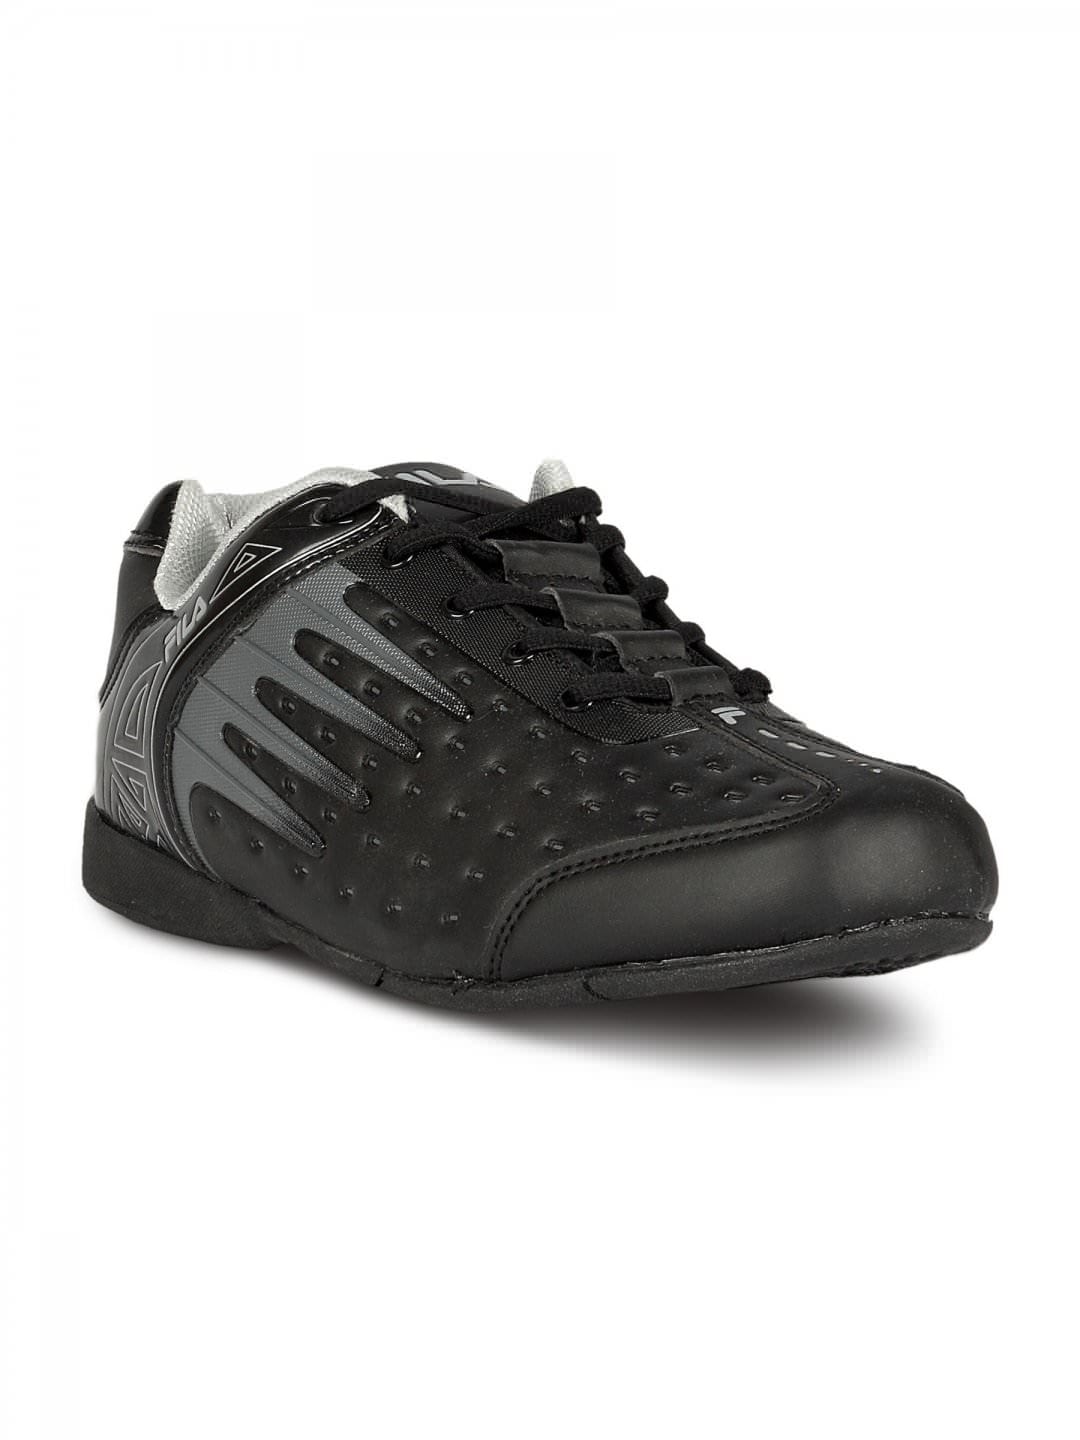 Fila Men's Batec Black Shoe